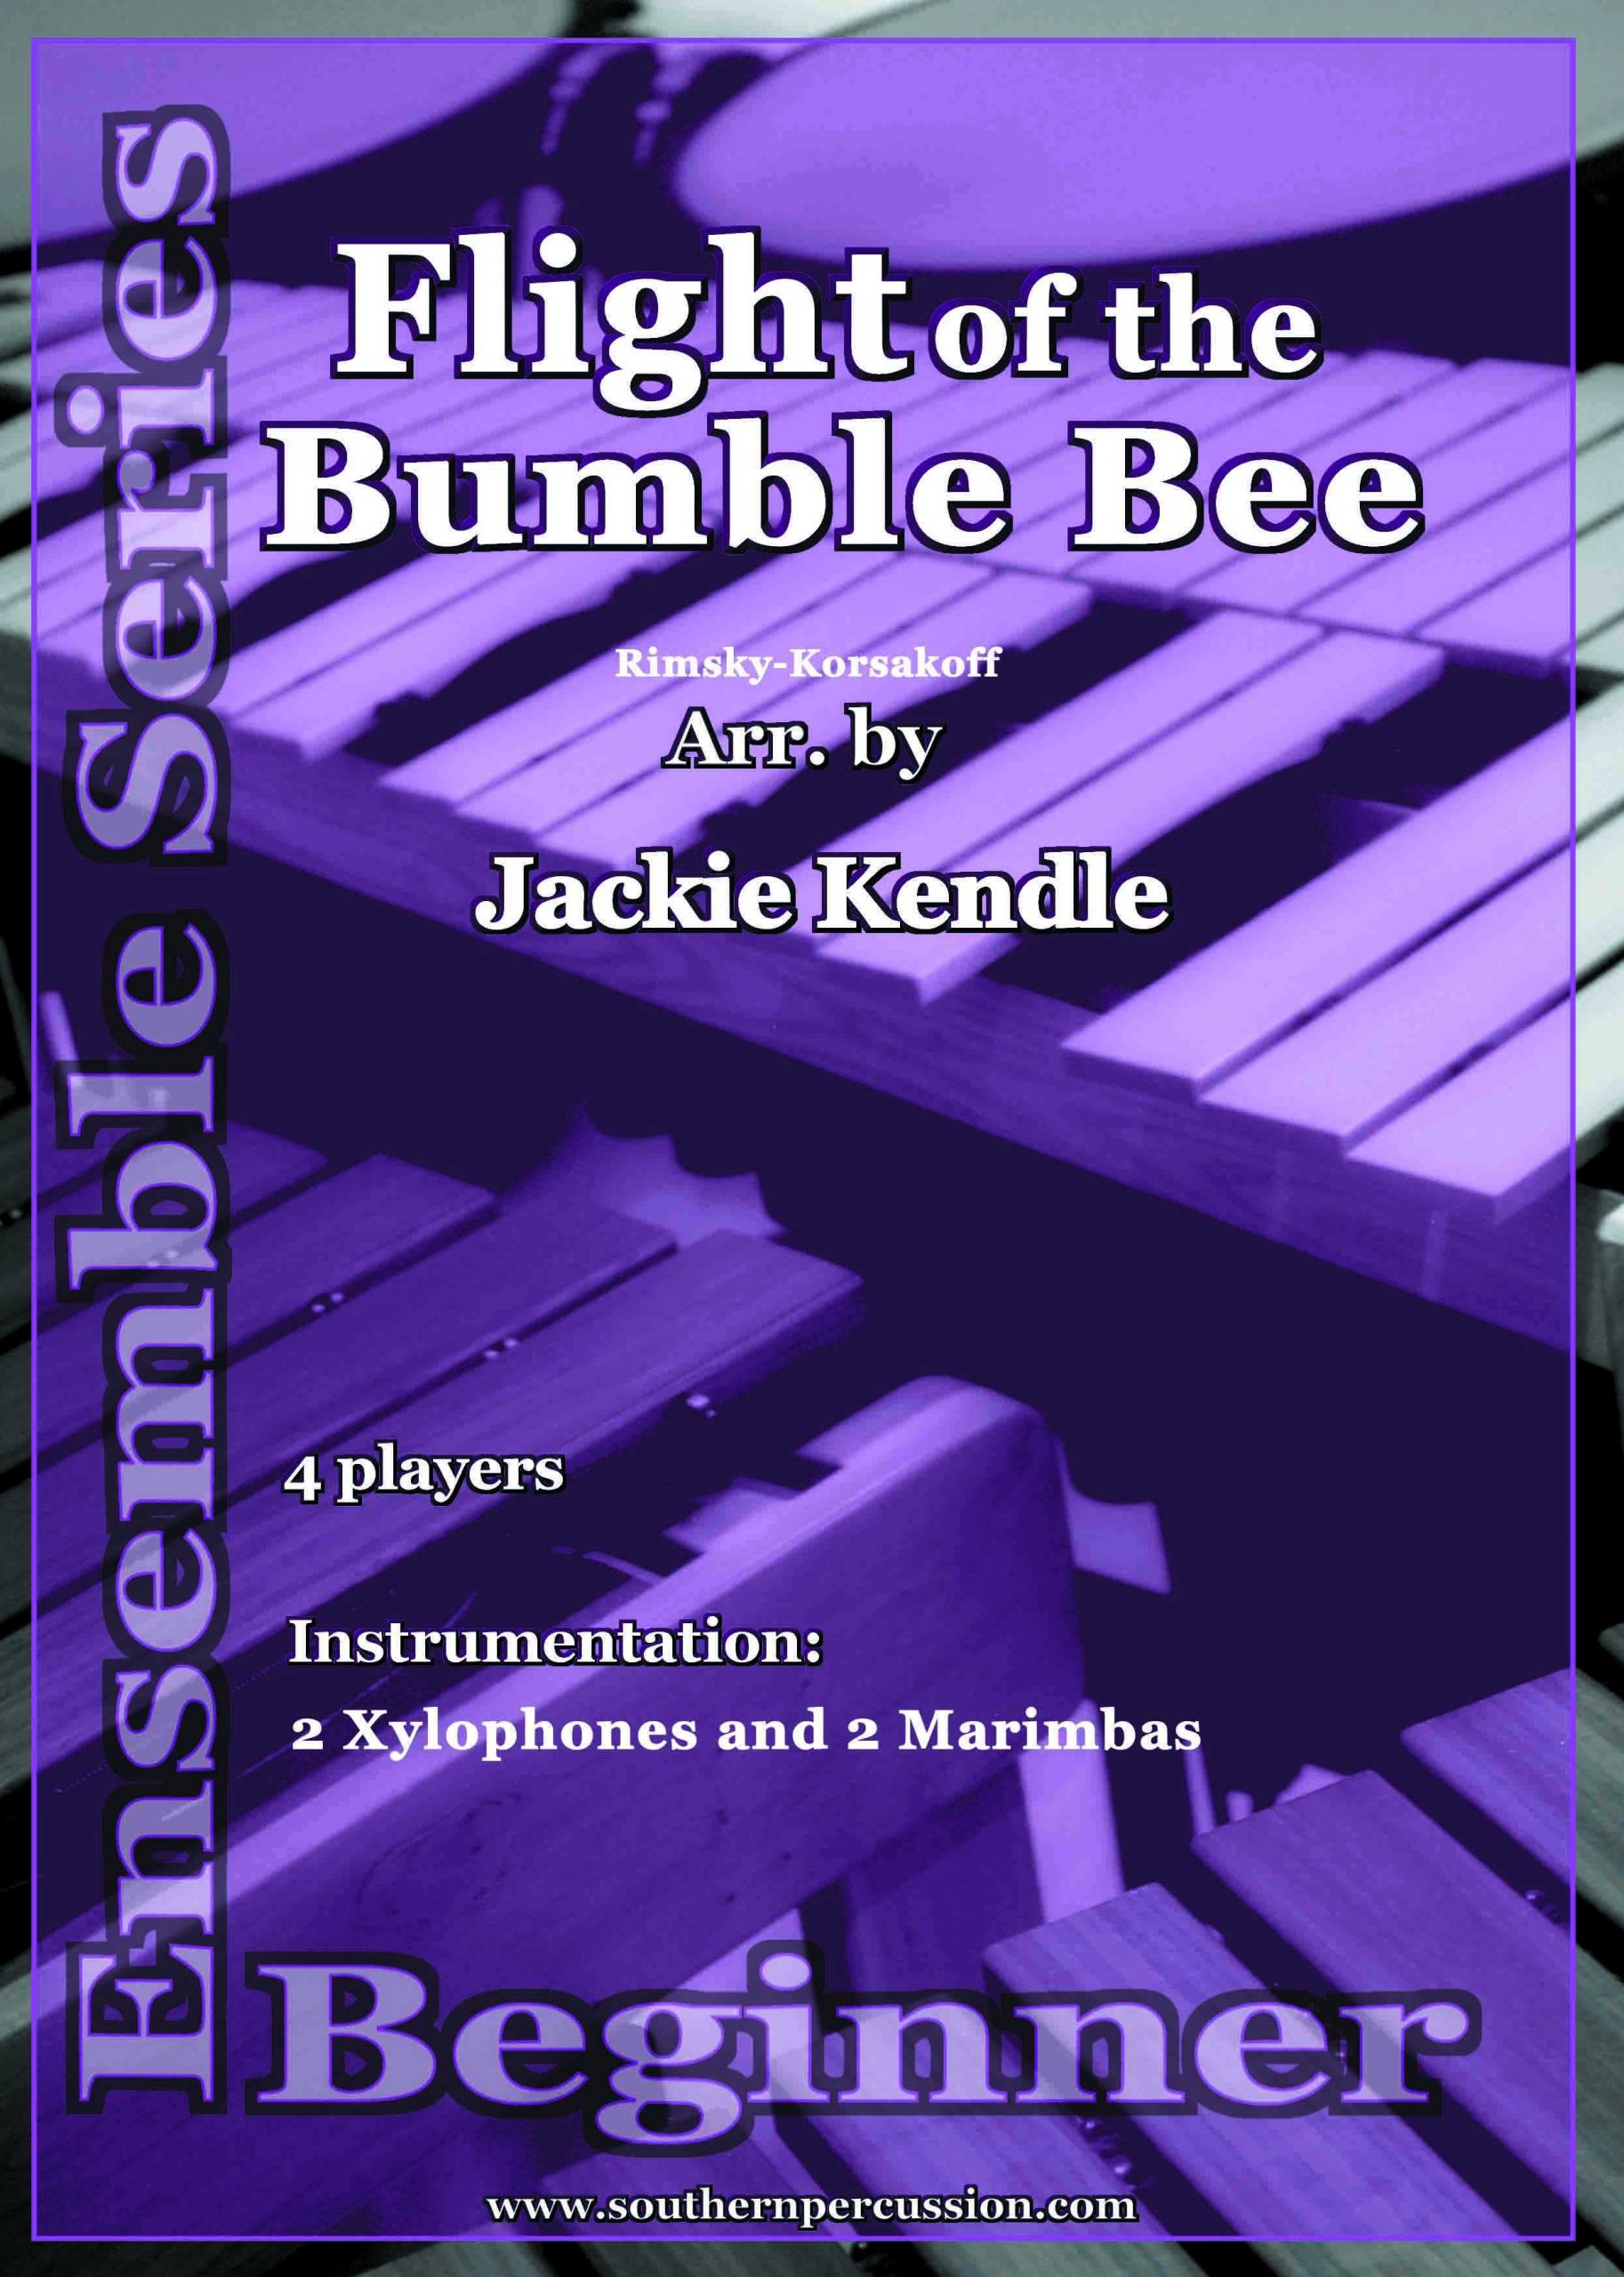 Flight of the Bumble Bee by Rimsky-Korsakow arr. Jackie Kendle